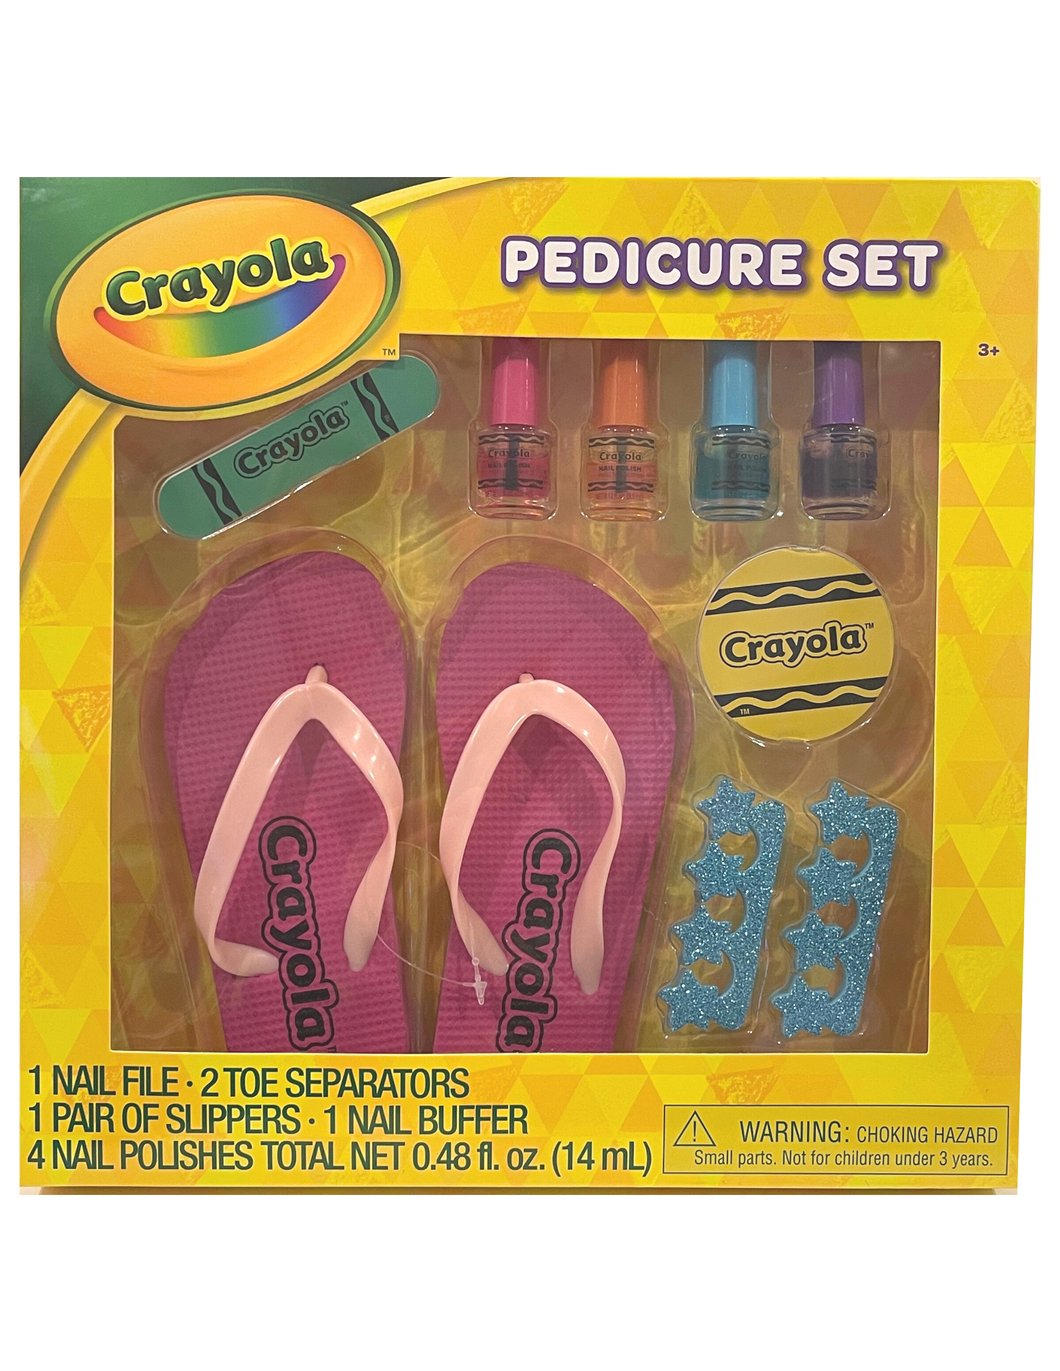 Crayola 9-Piece Pedicure Gift Set: Polish, Buffers, Flip-Flops and More!